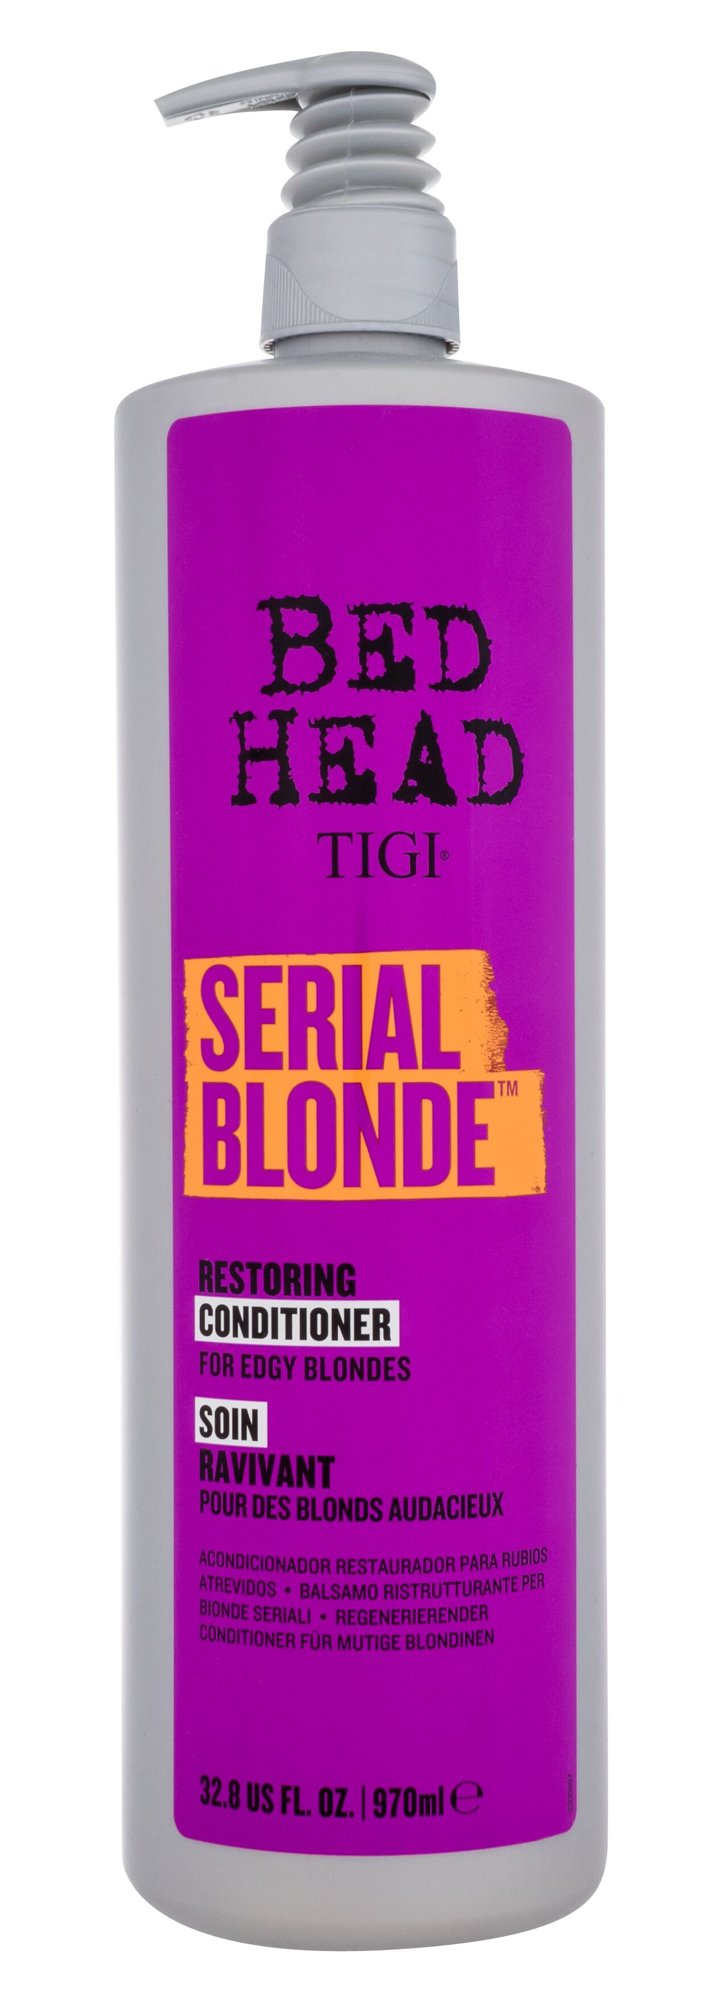 Tigi Bed Head Serial Blonde 970ml kondicionierius